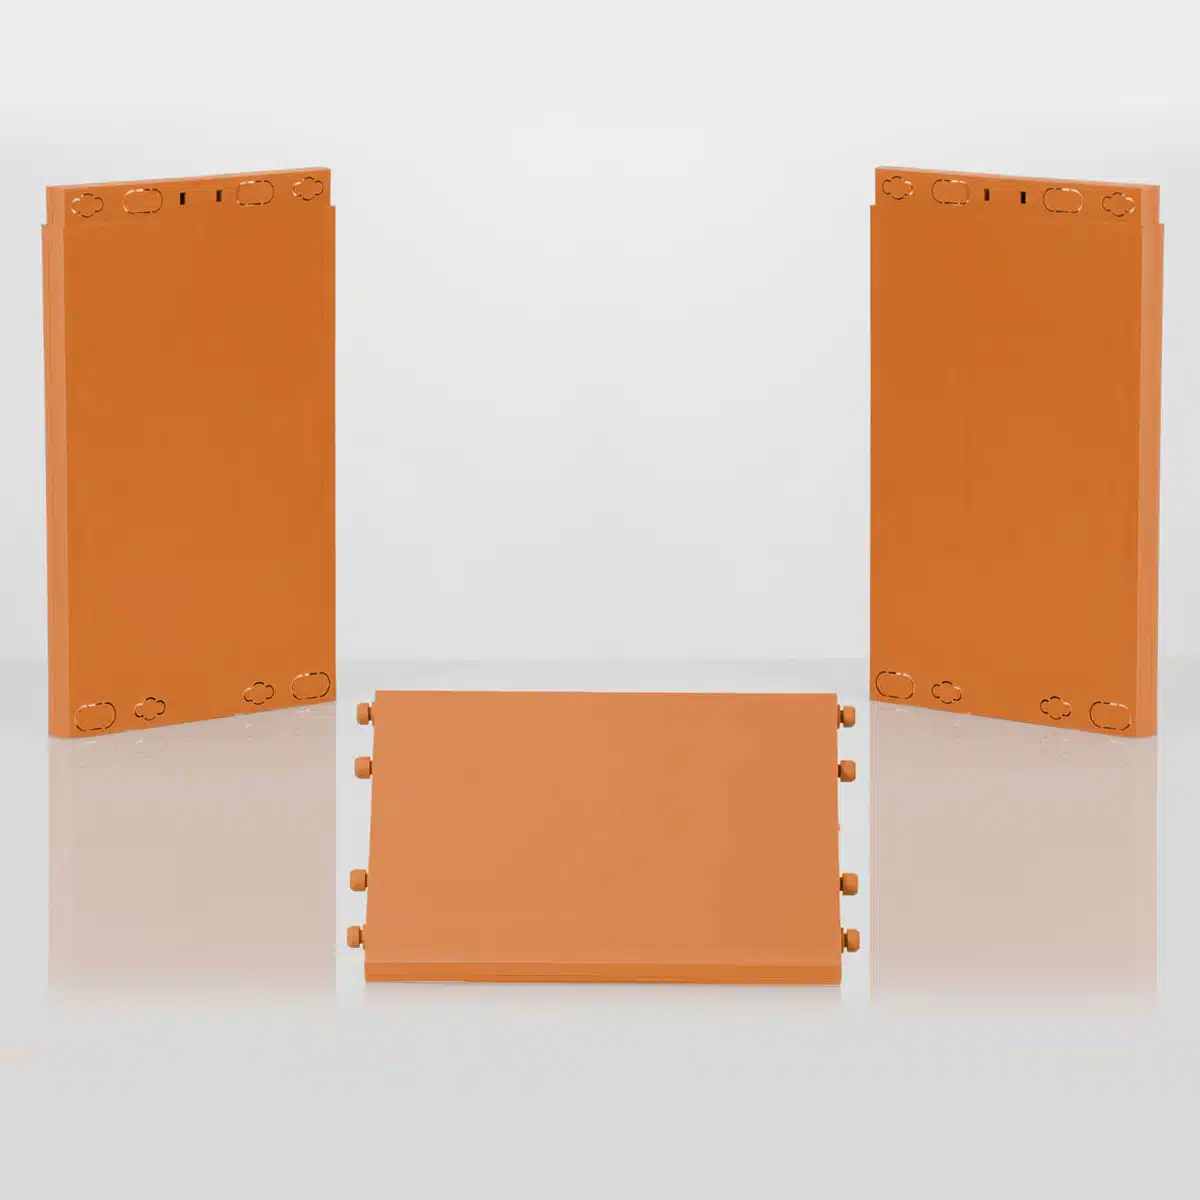 montant et tablette clikube orange